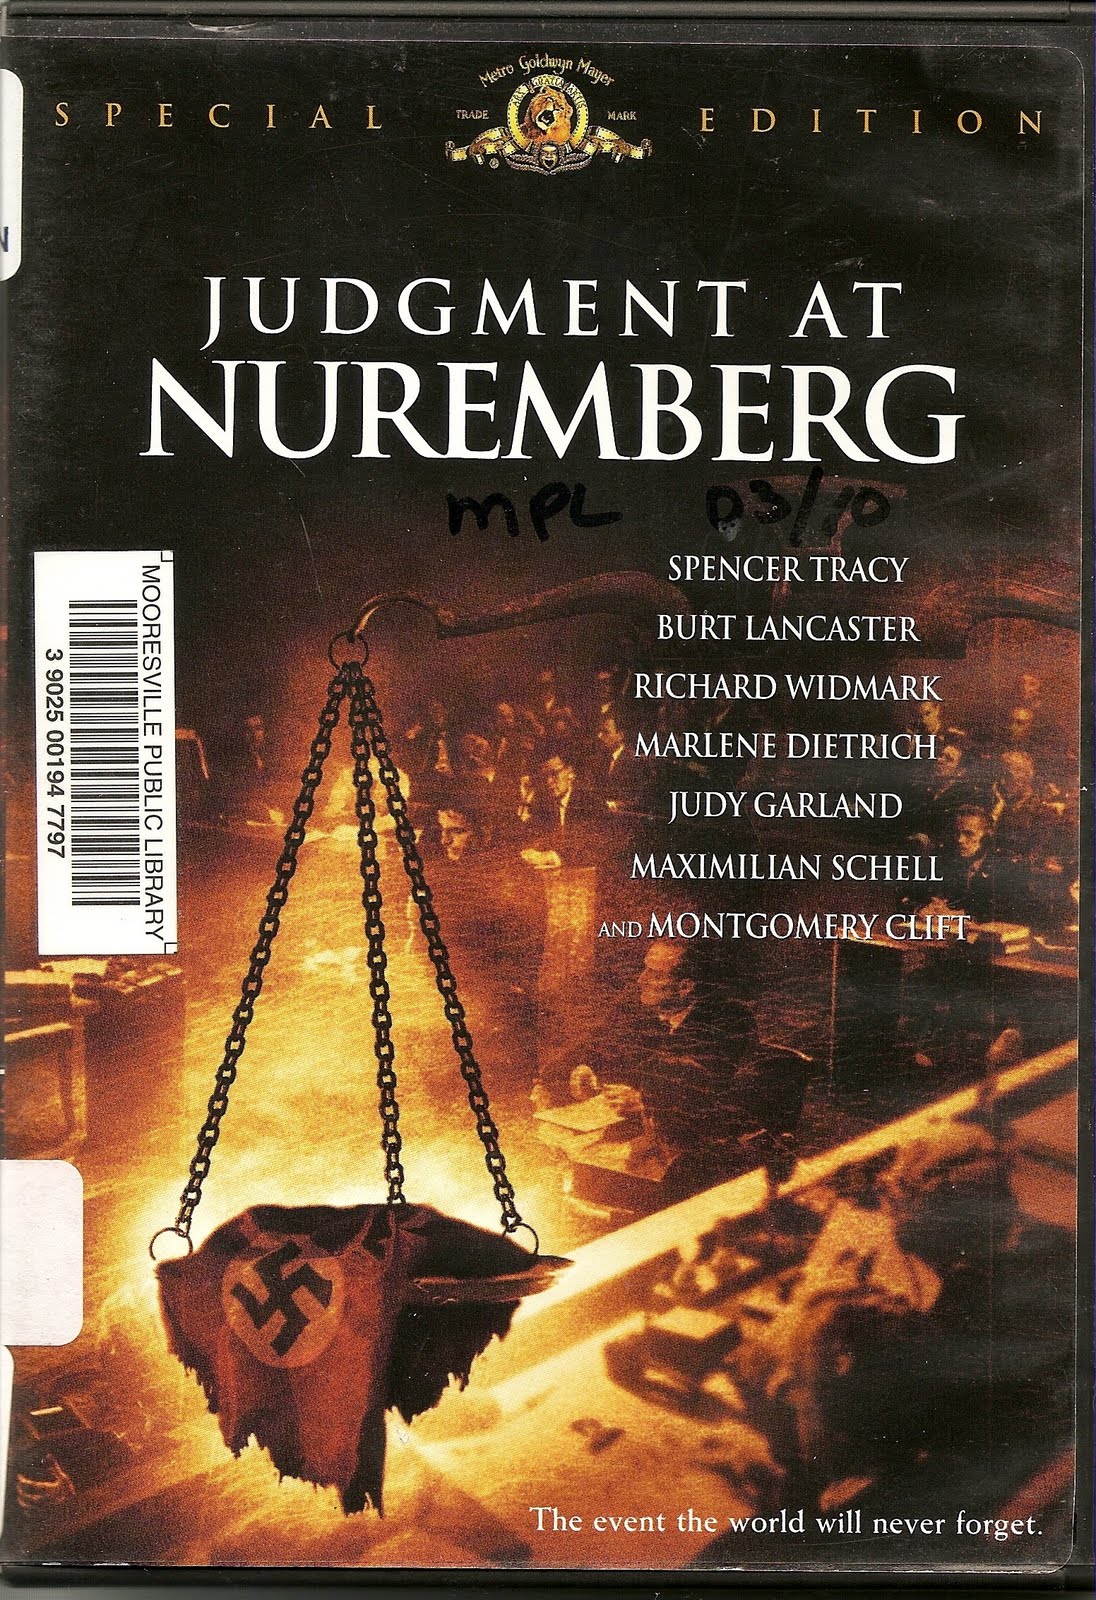 Nuremberg: Tyranny On Trial [1995 TV Special]